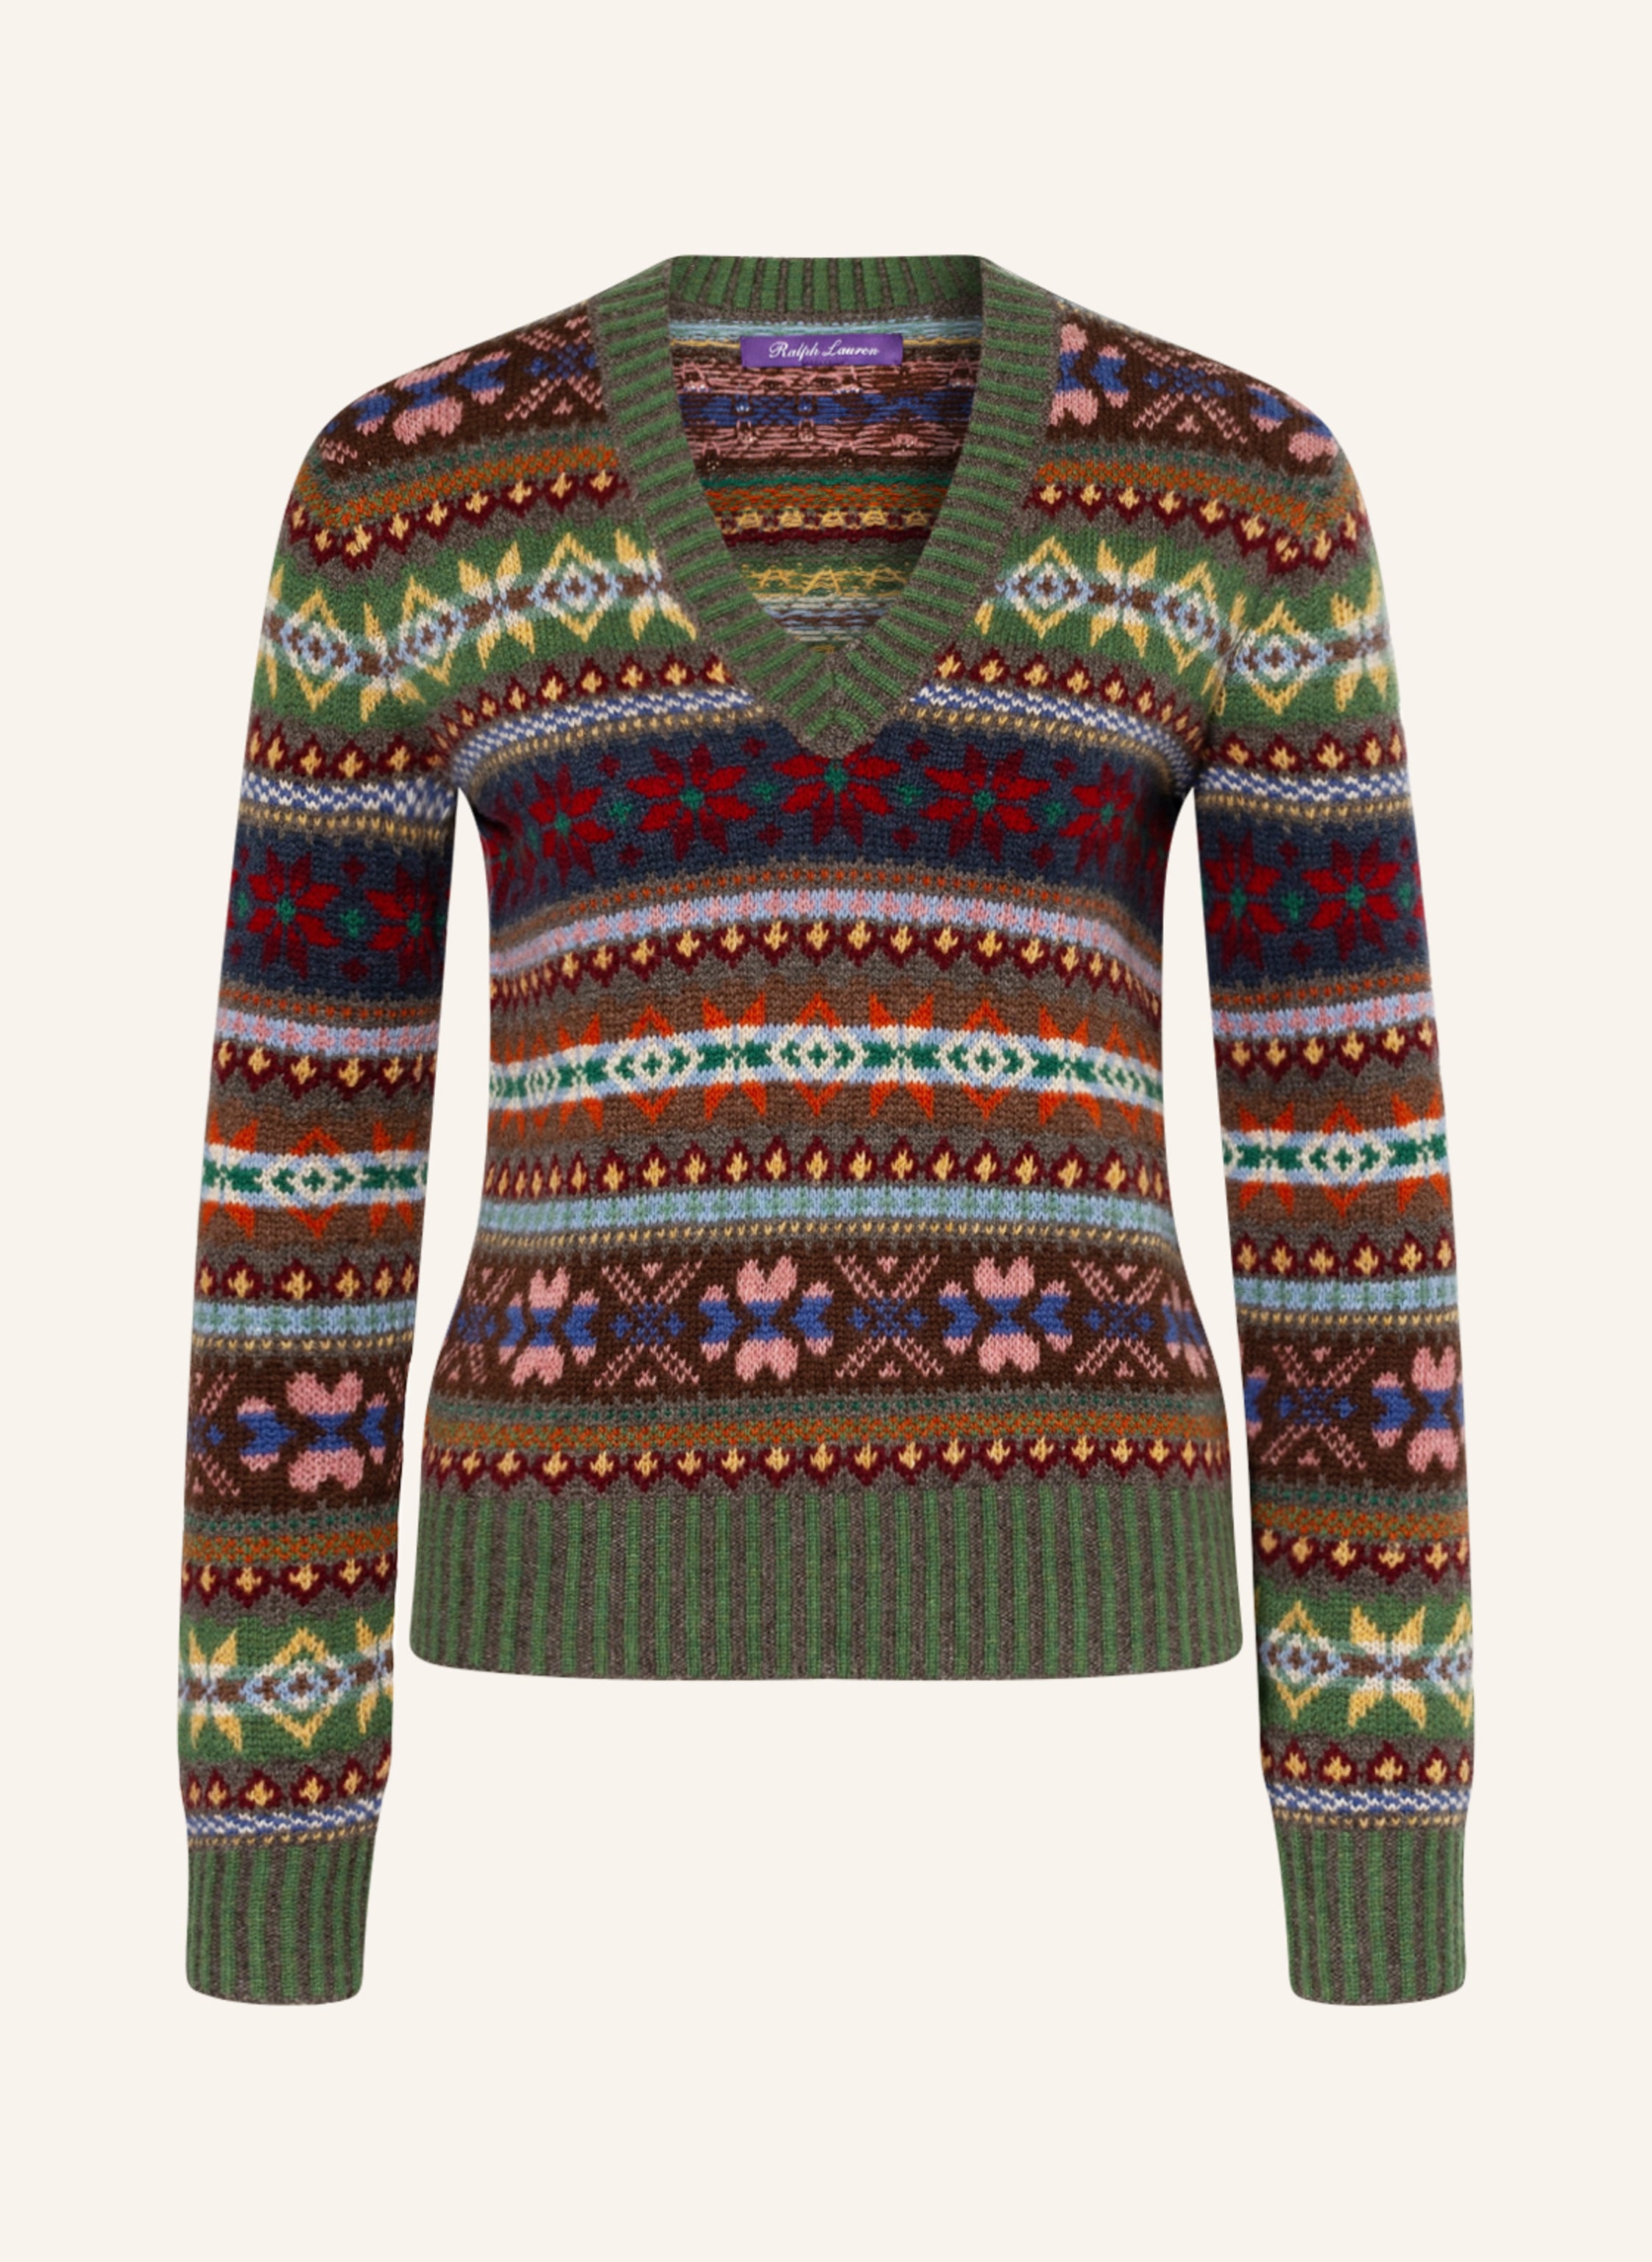 RALPH LAUREN Collection Cashmere sweater in green/ orange/ red | Breuninger